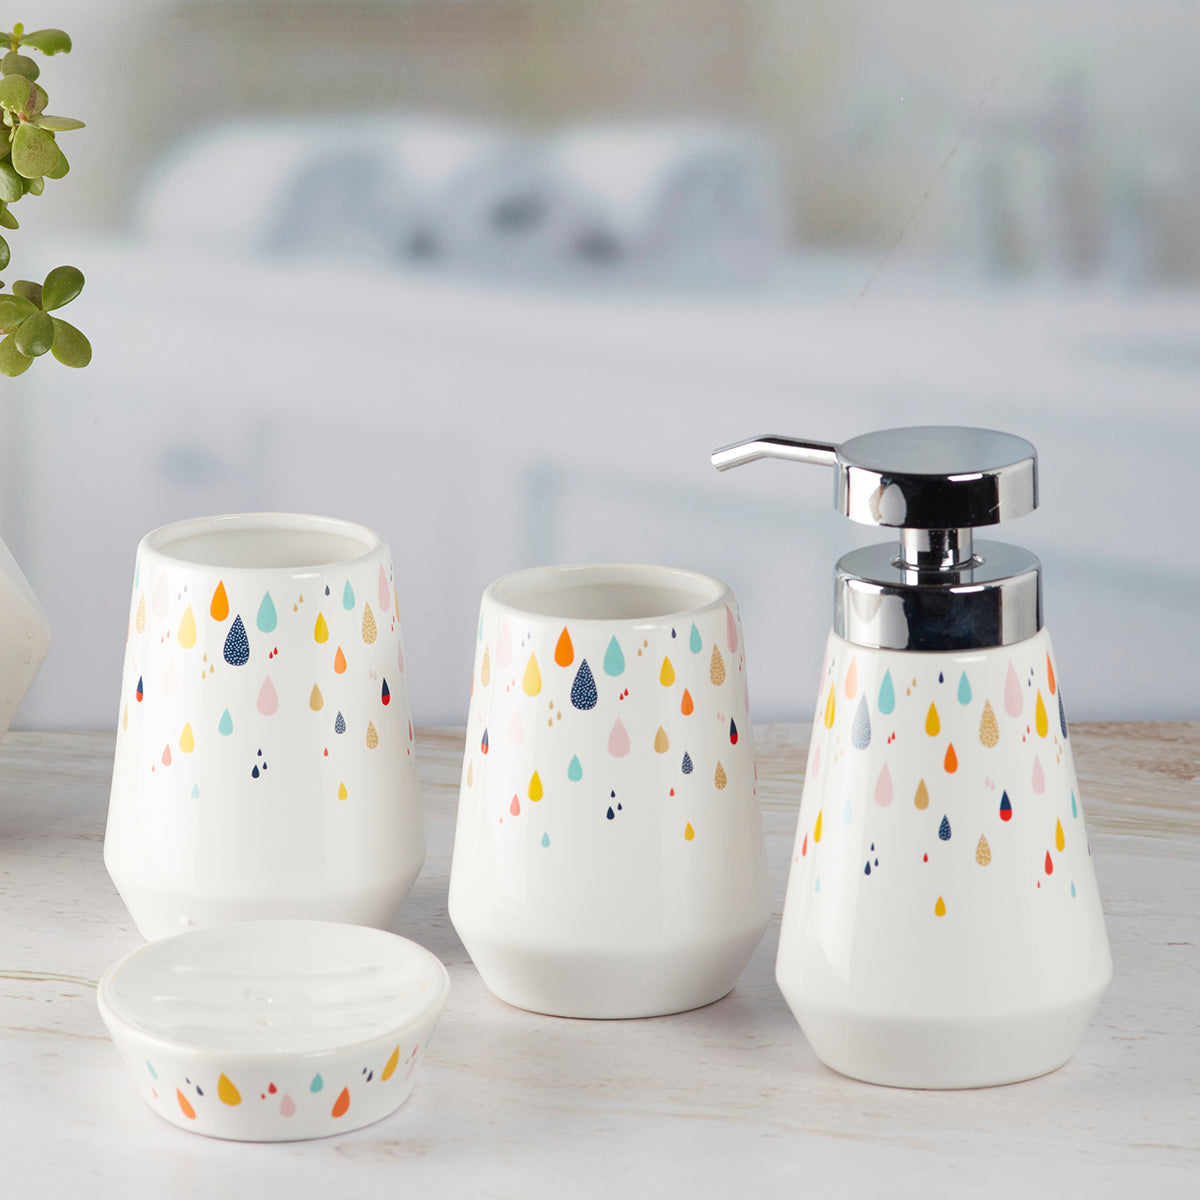 Ceramic Bathroom Accessories Set of 4 Bath Set with Soap Dispenser (9871)